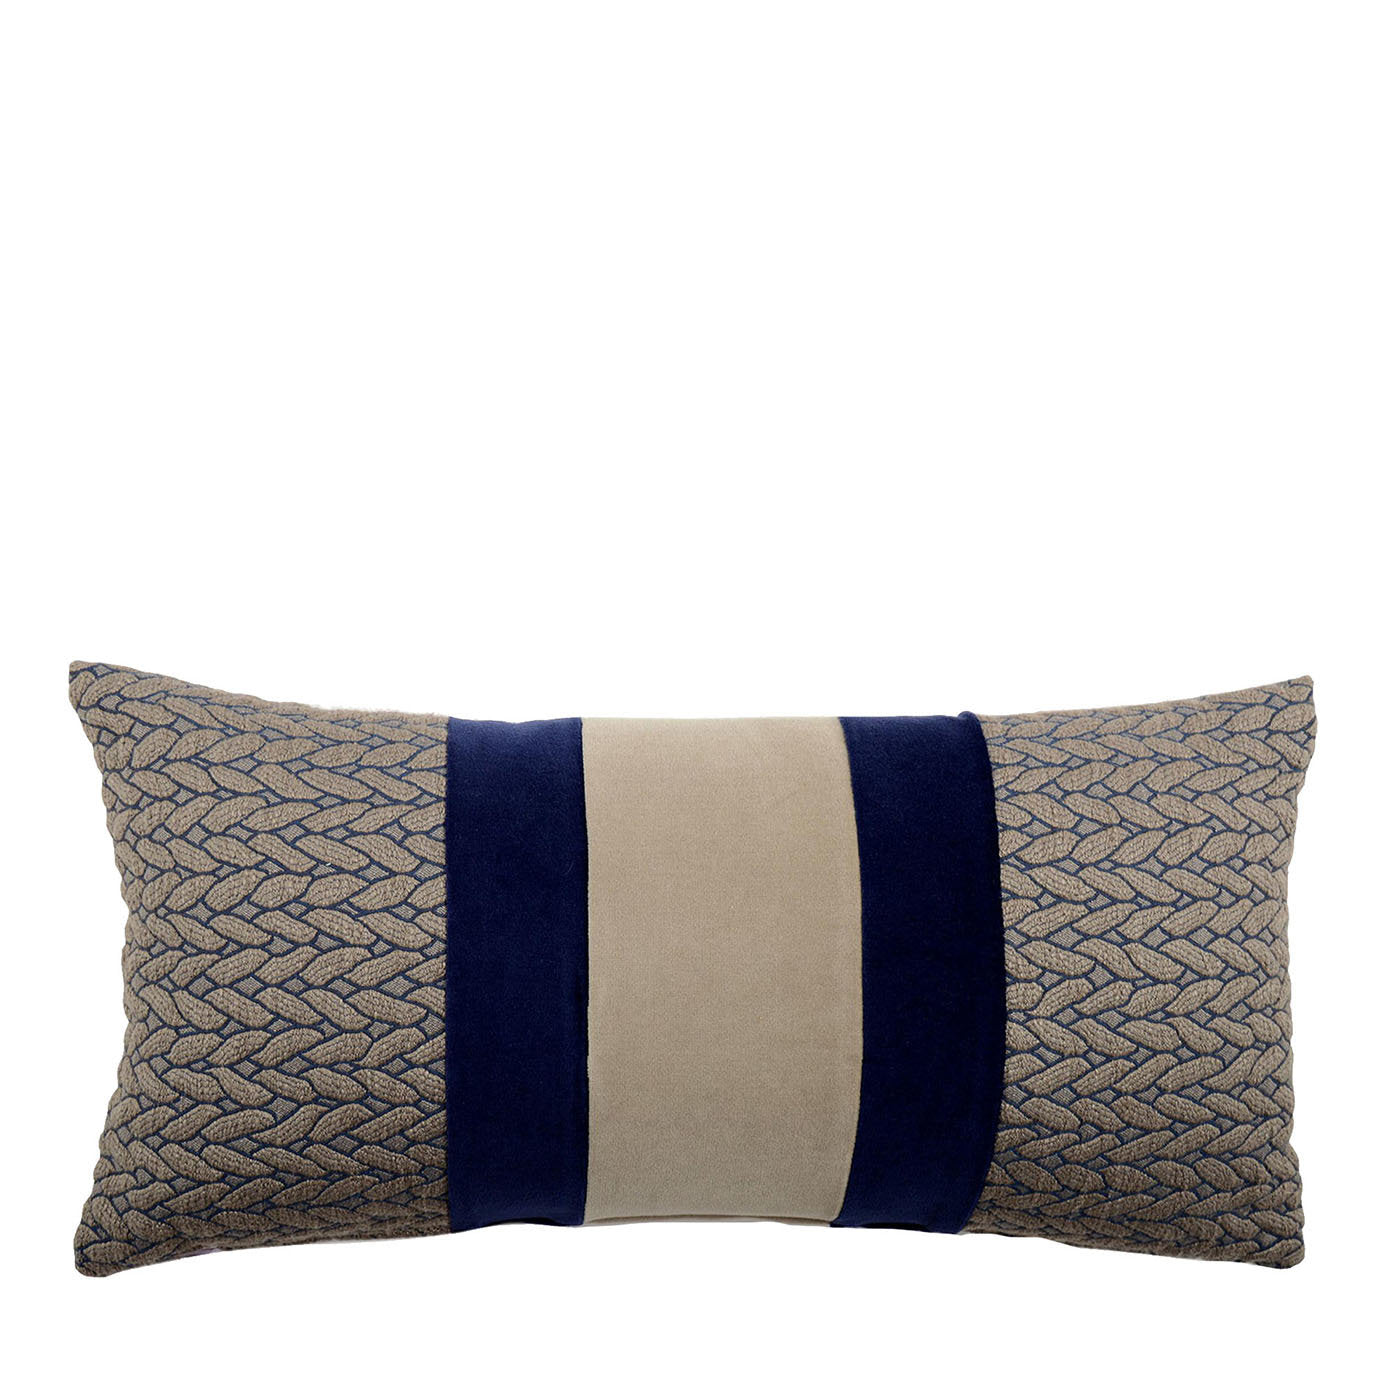 Rectangular Nastro Cushion in tricot jacquard fabric - Main view